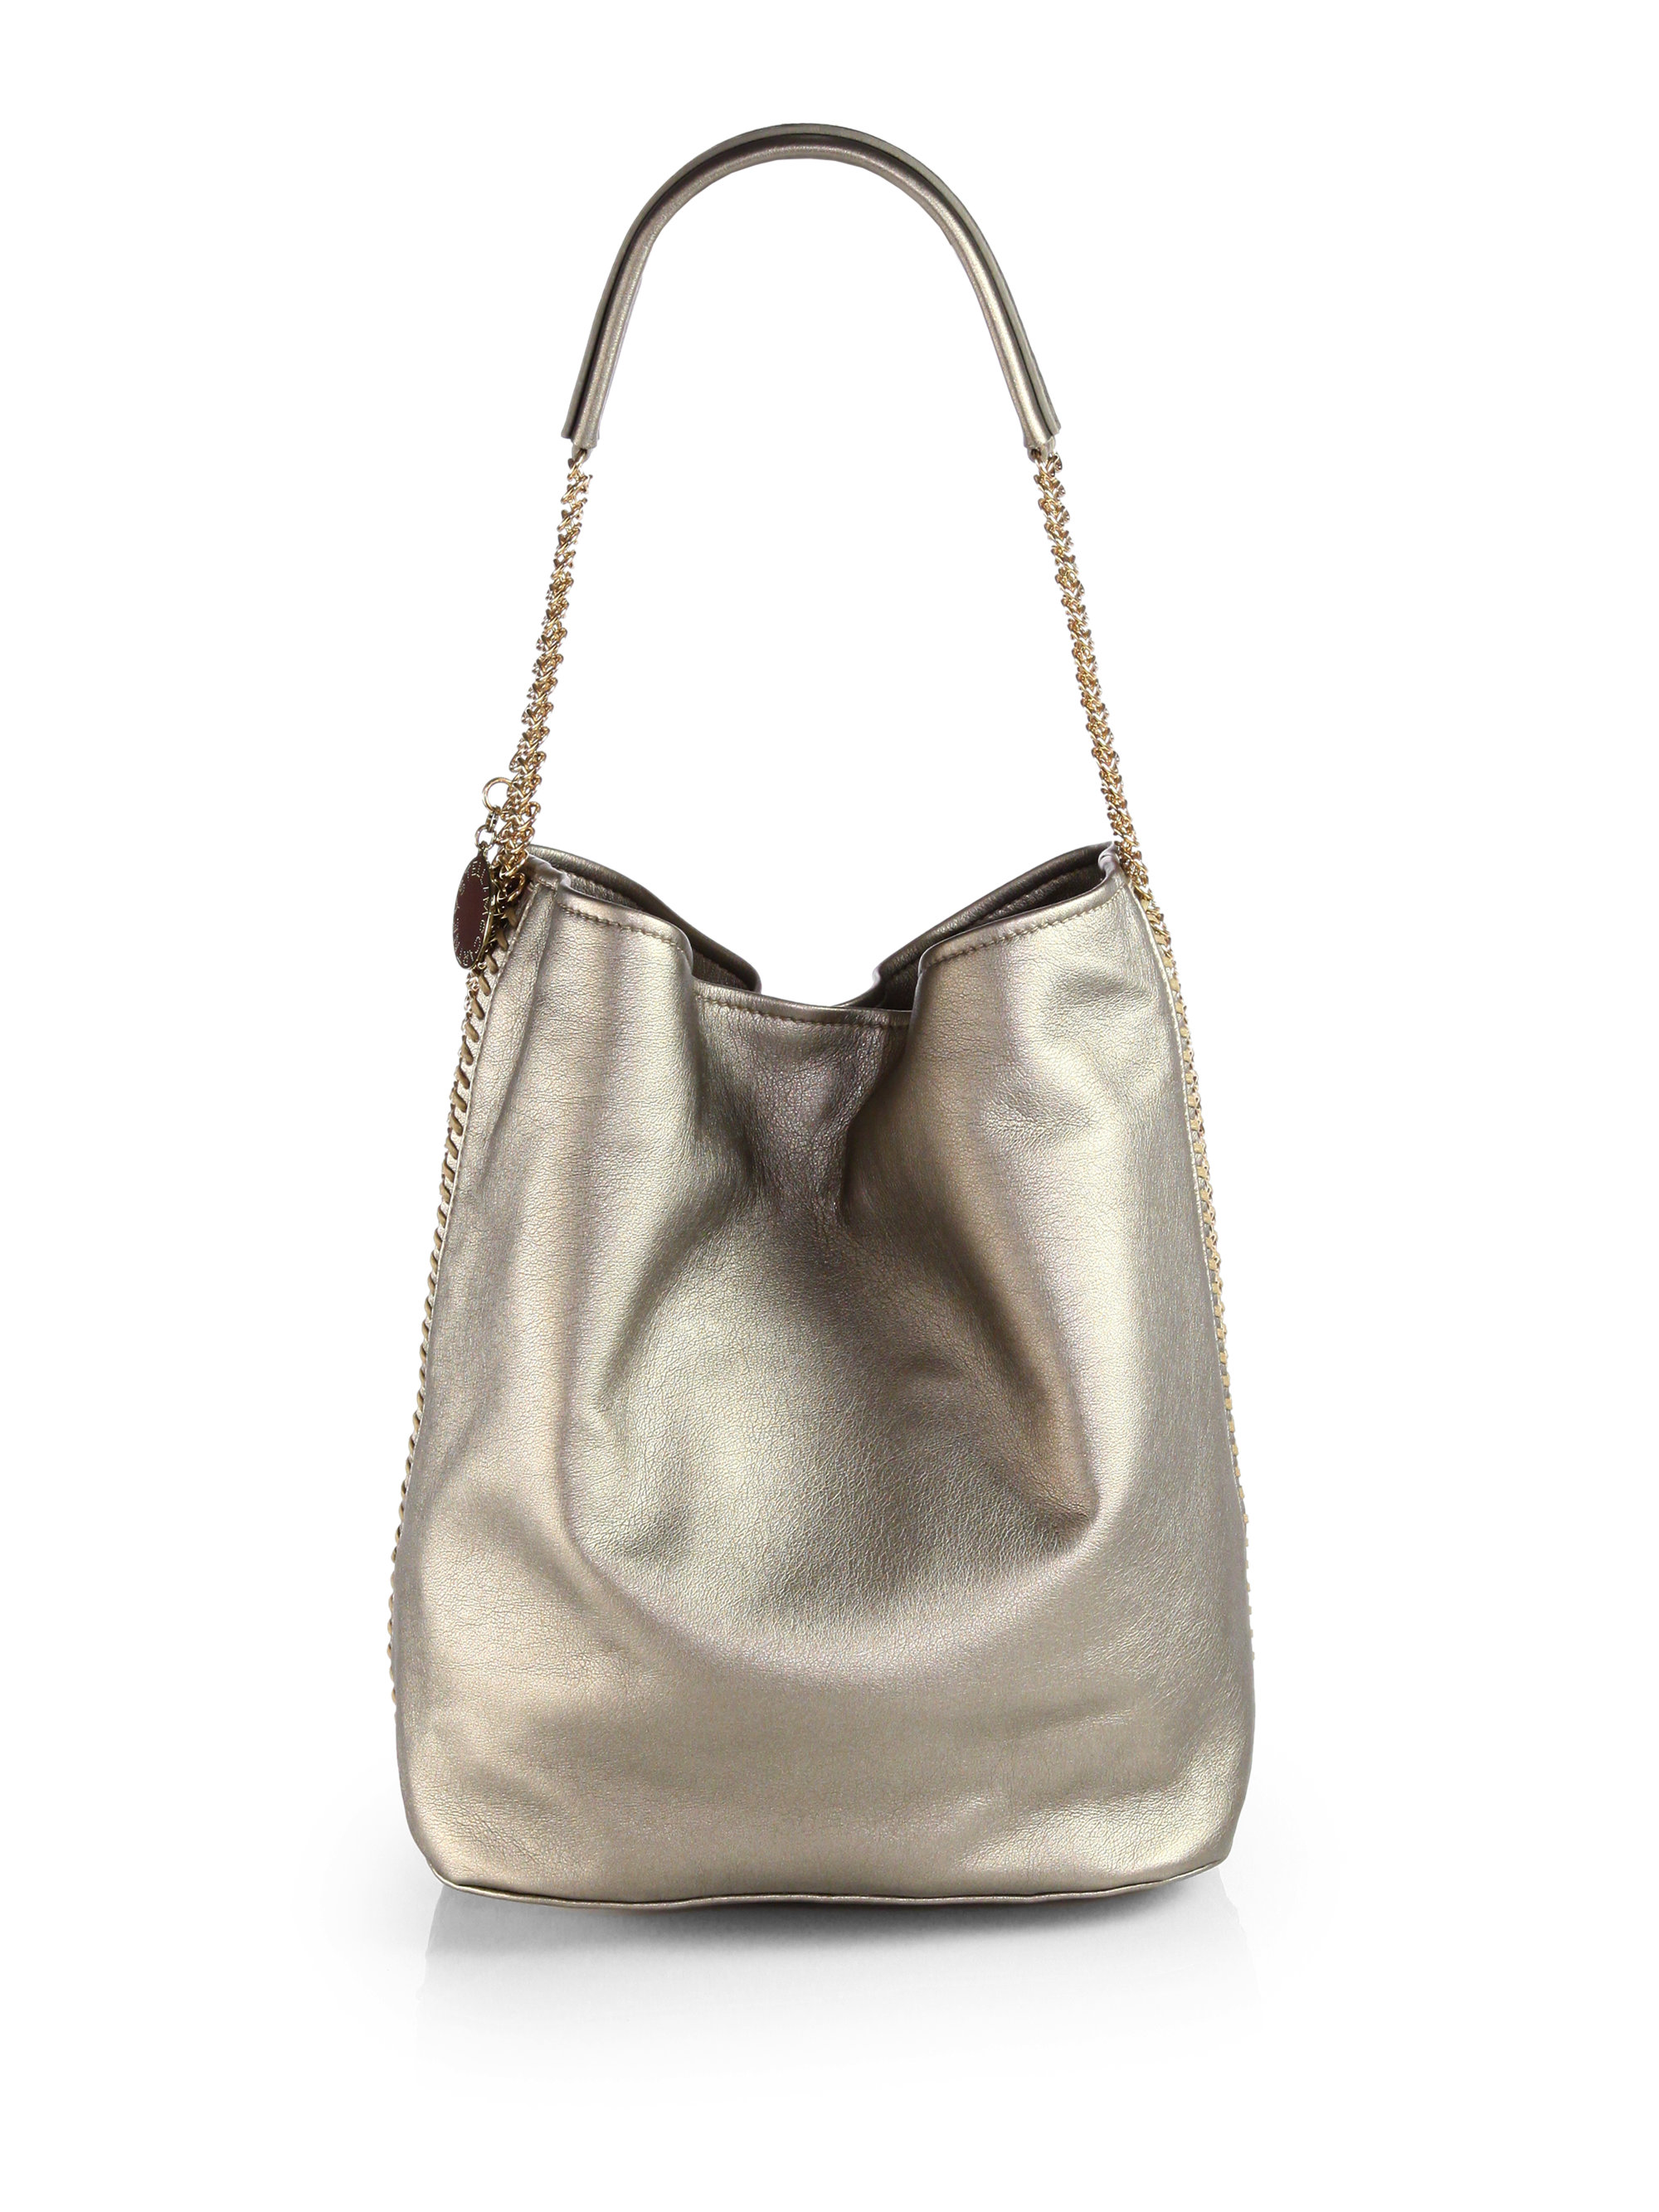 Stella Mccartney Medium Metallic Hobo Bag in Gold (PLATINUM) | Lyst